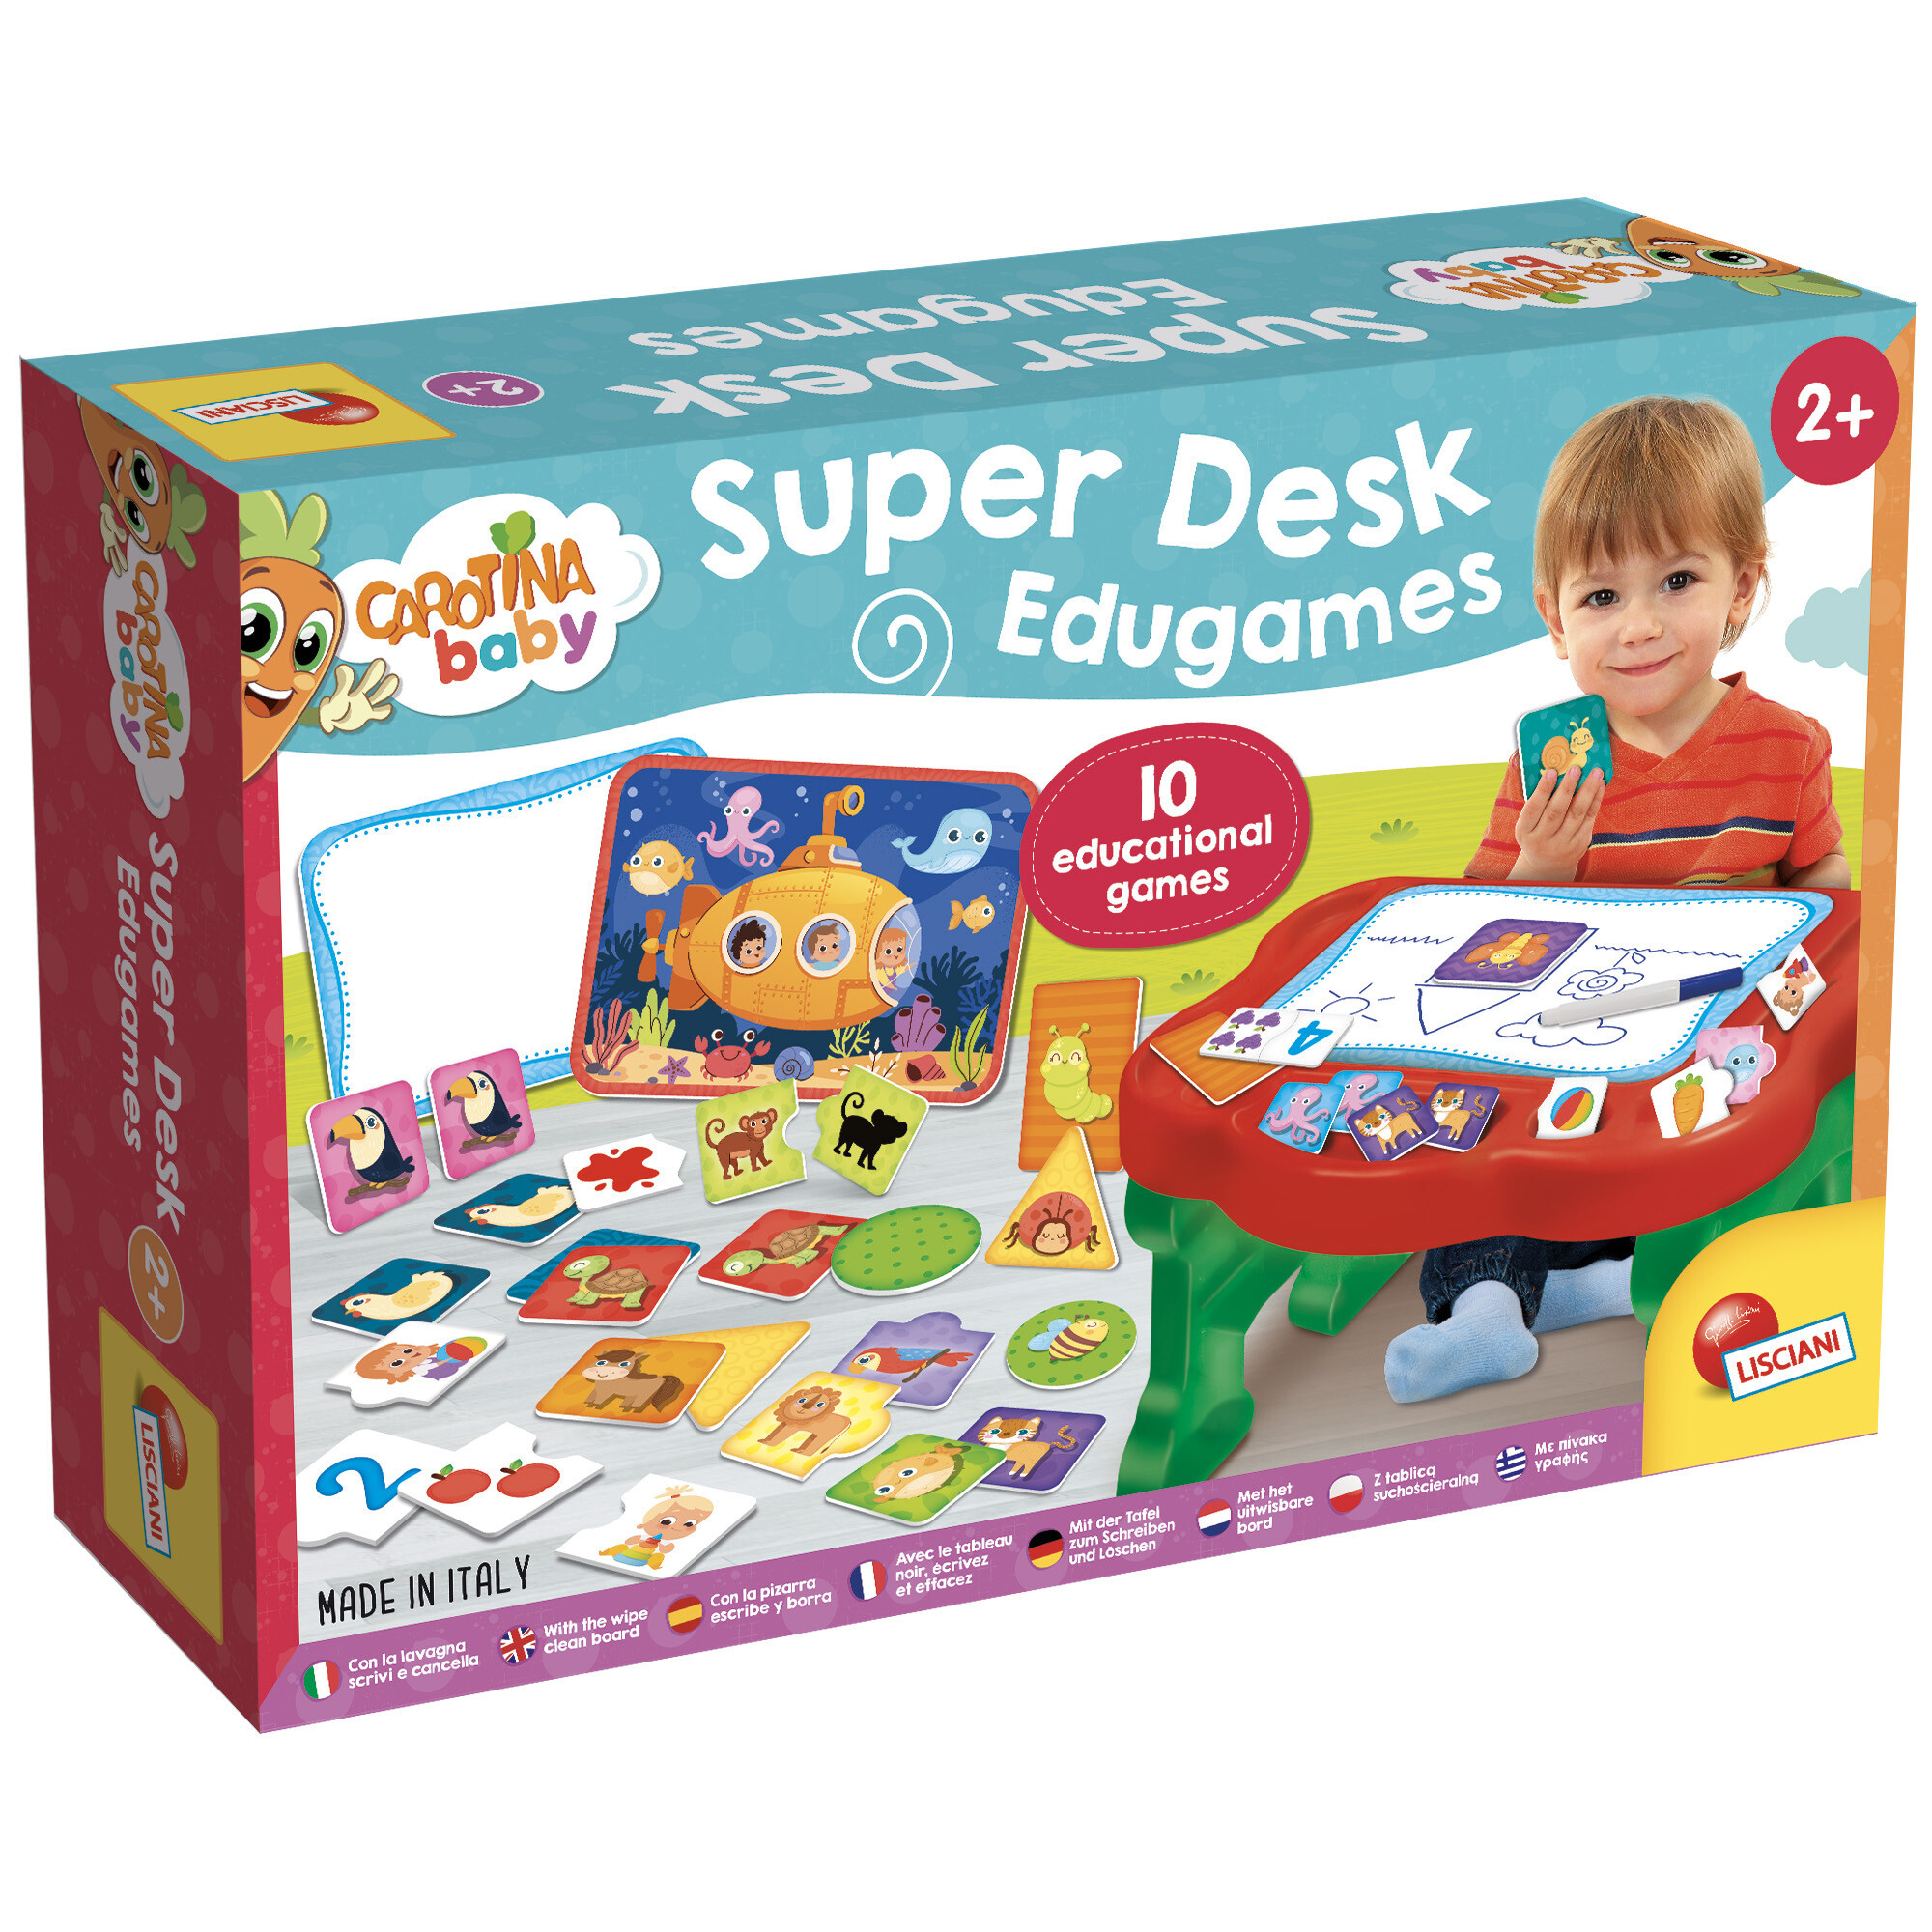 Carotina baby super desk educational - LISCIANI